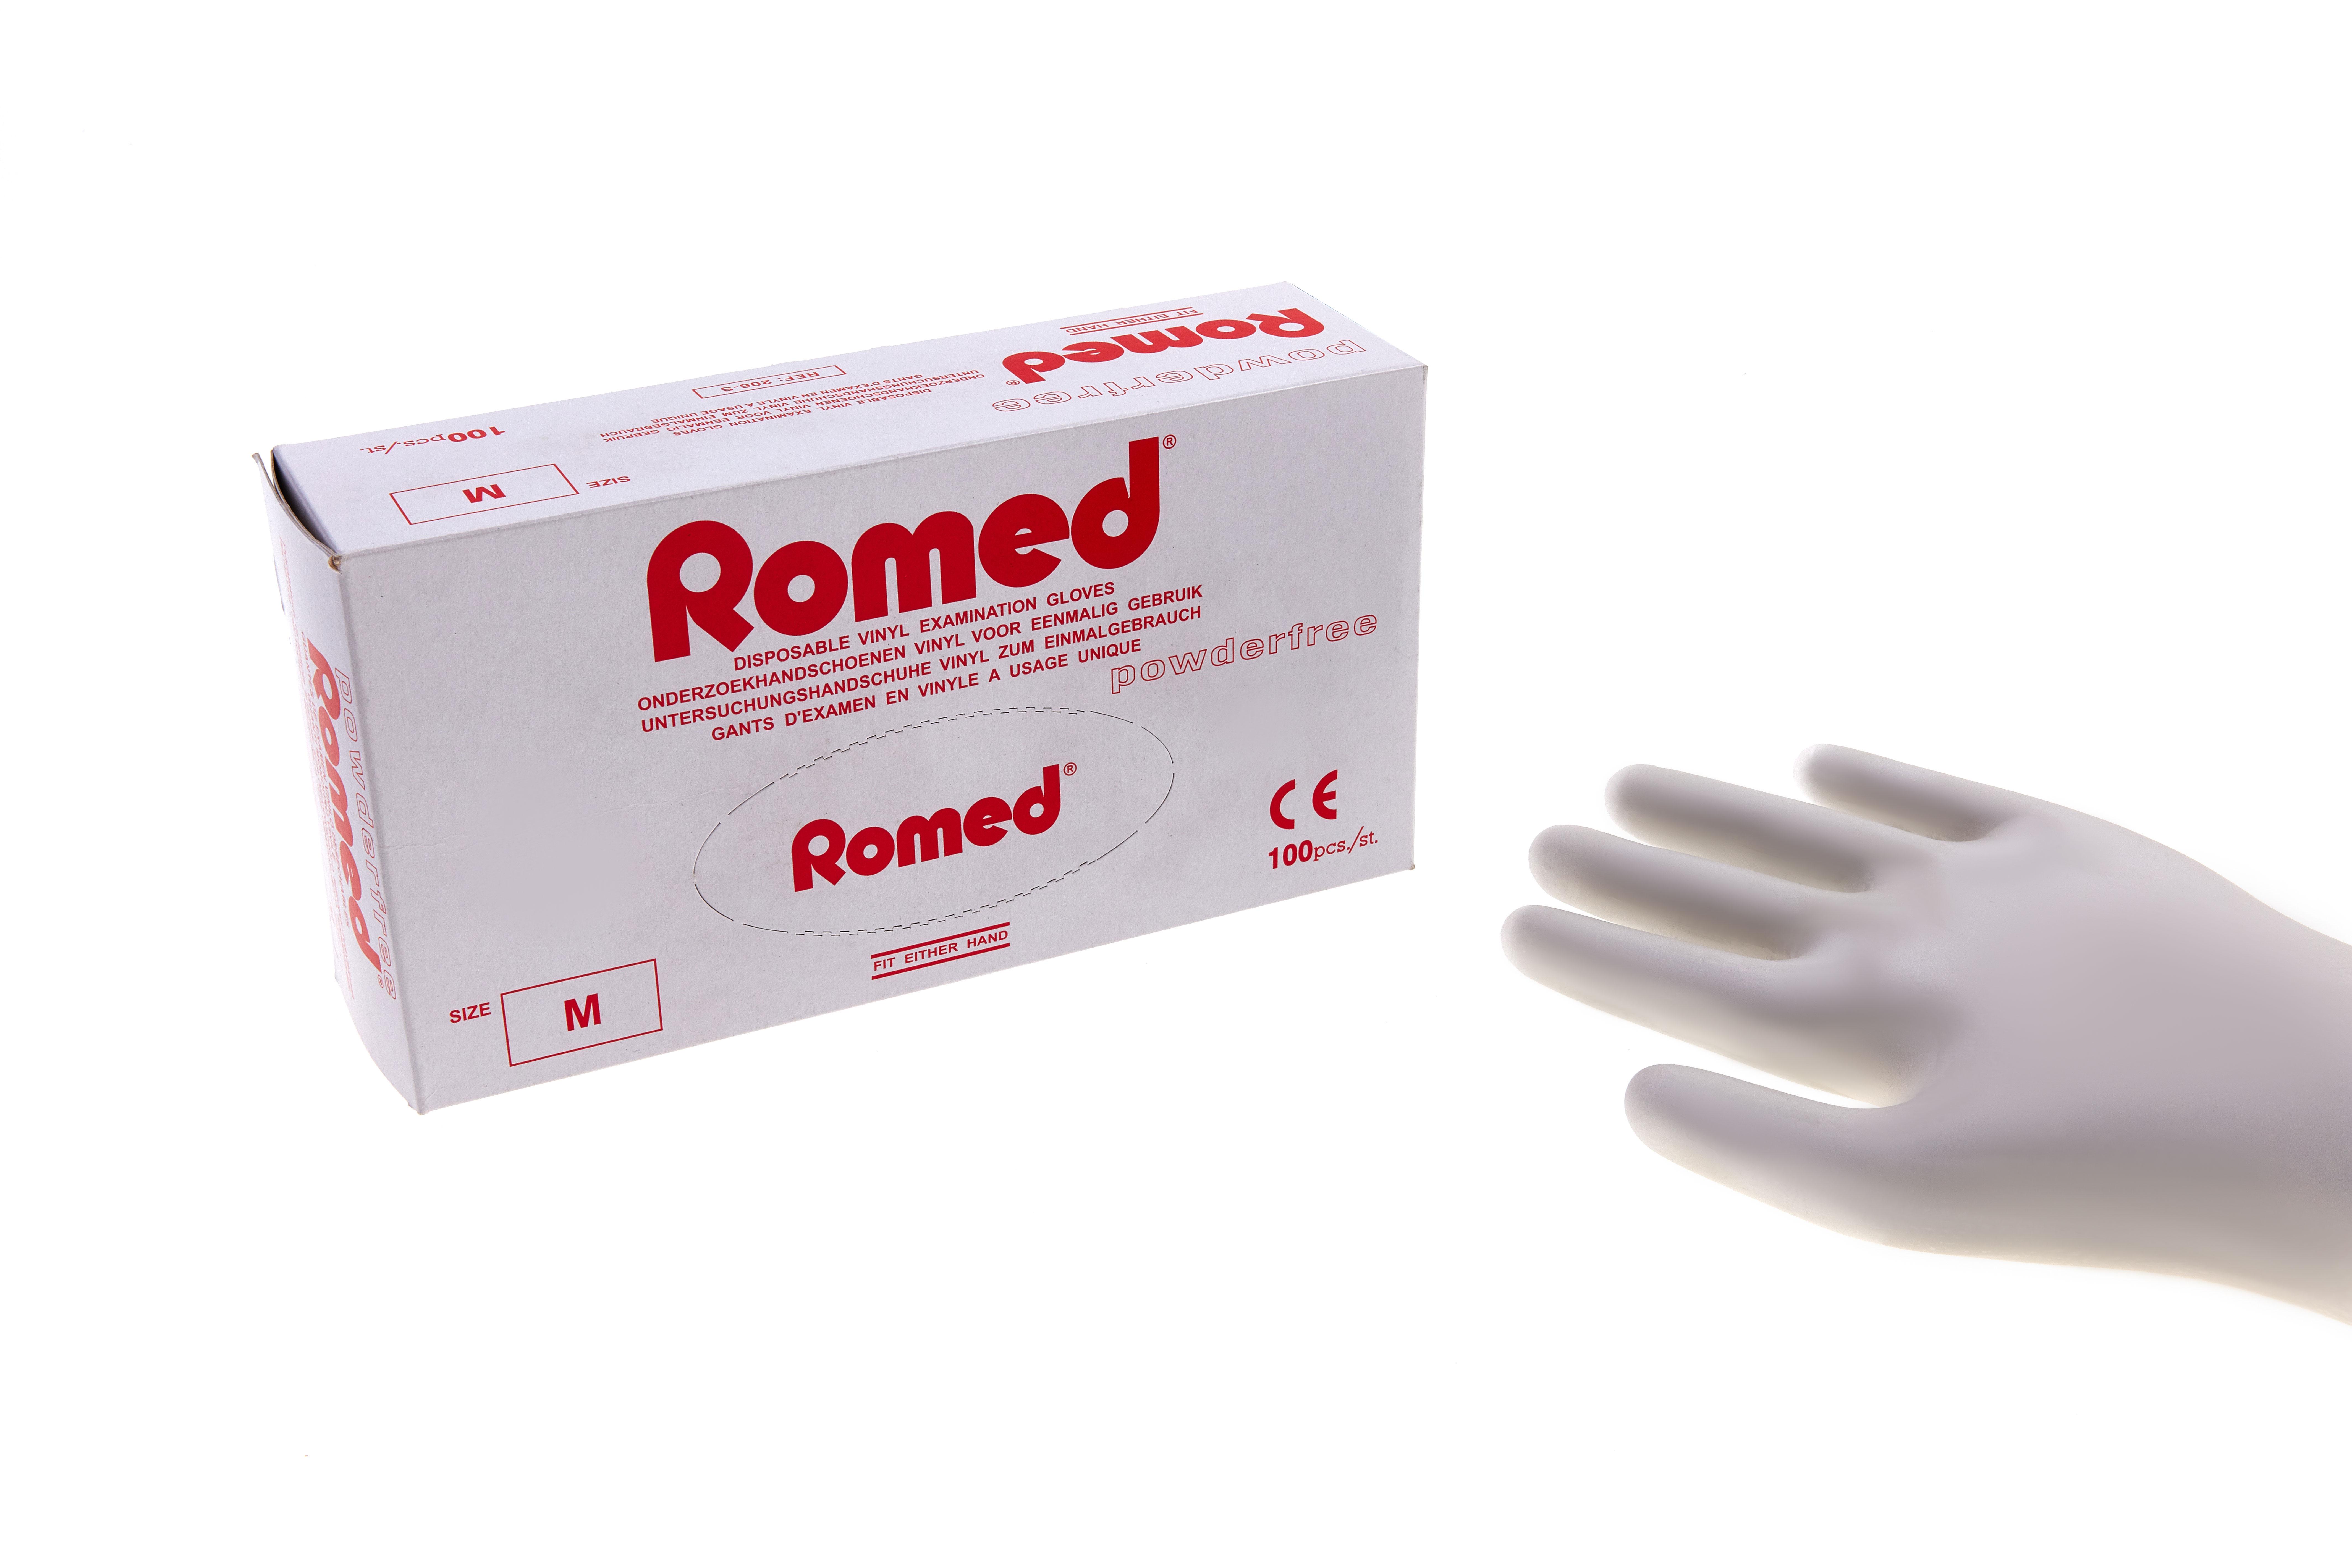 201-S Romed vinyl examination gloves, non sterile, powderfree, size small, per 100 pcs in a dispenser box, 10 x 100 pcs = 1.000 pcs in a carton.